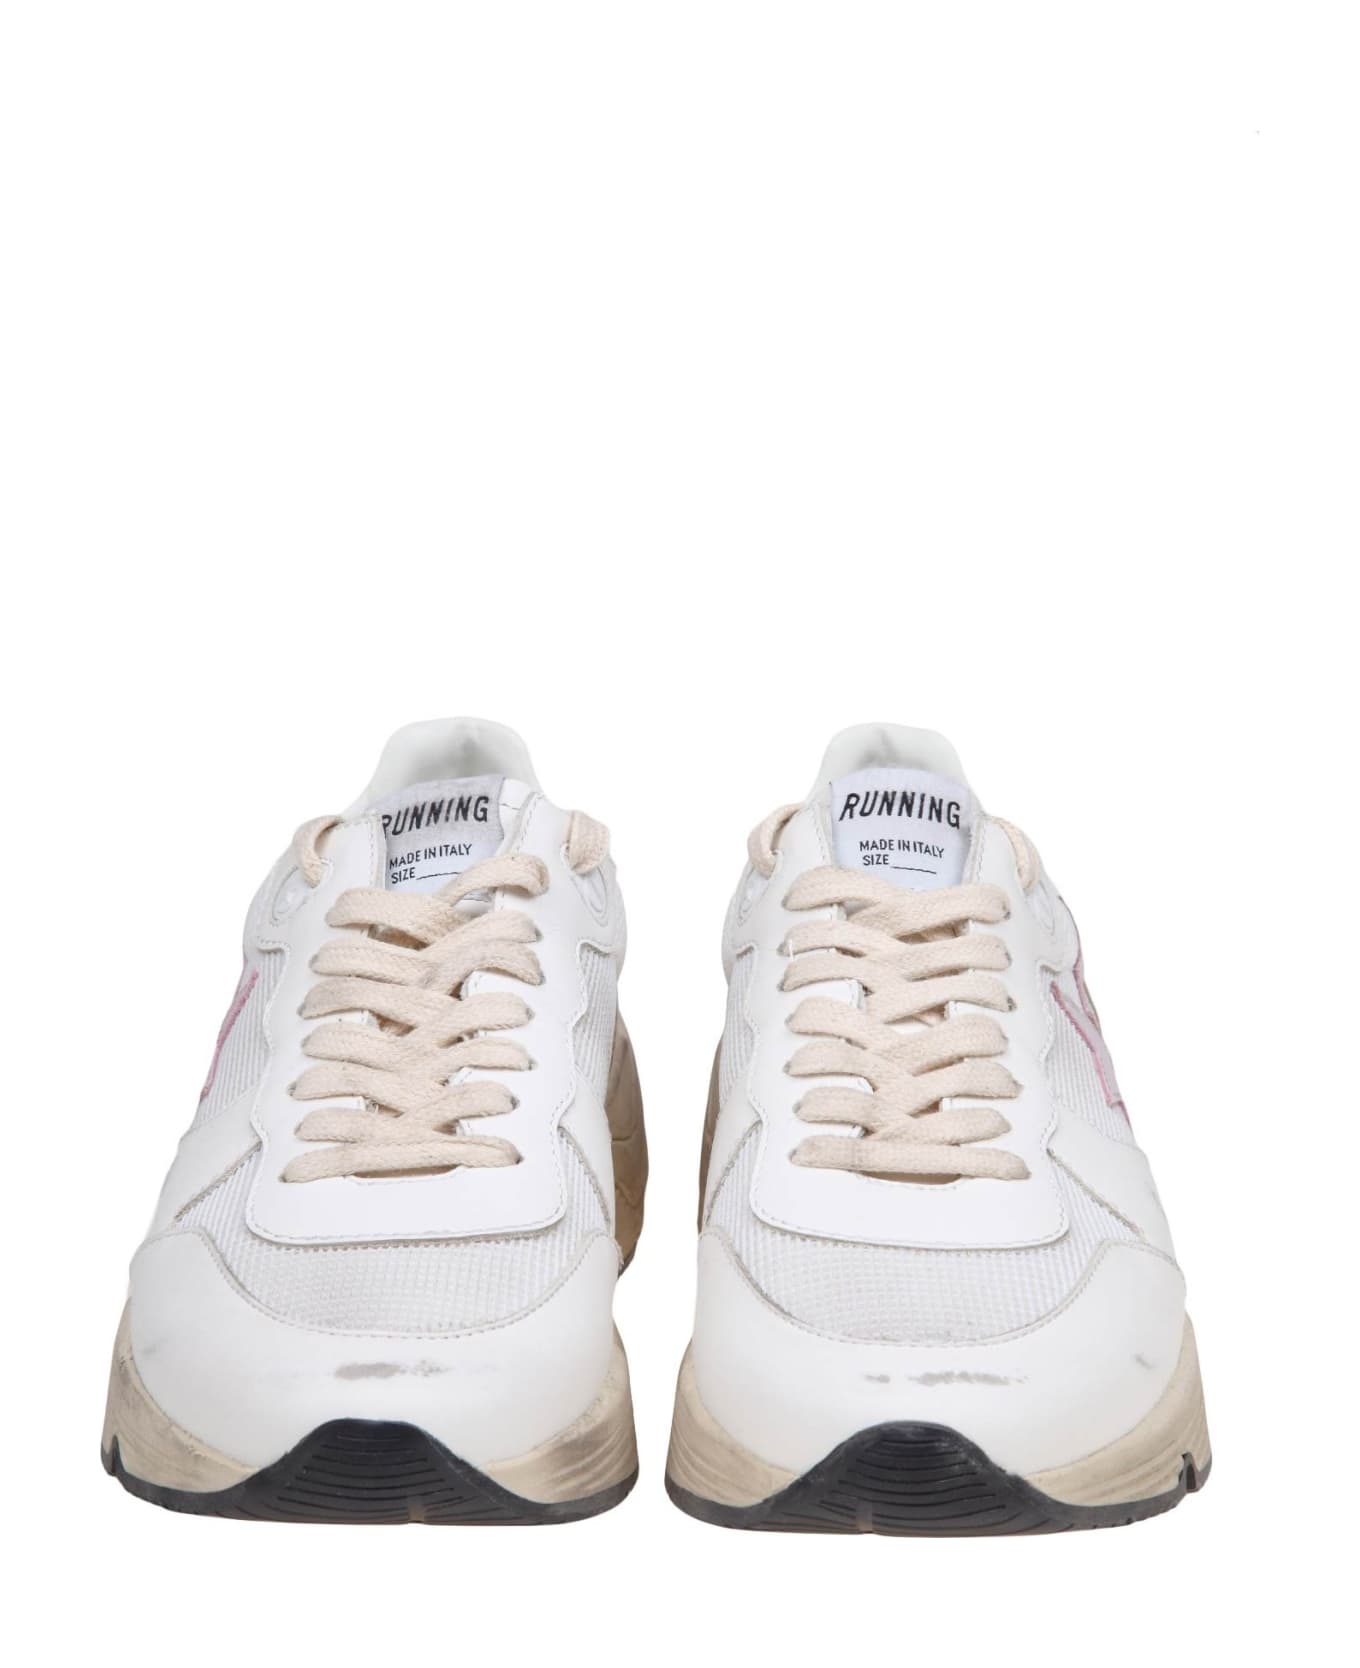 Golden Goose Running Sole Sneakers - White スニーカー